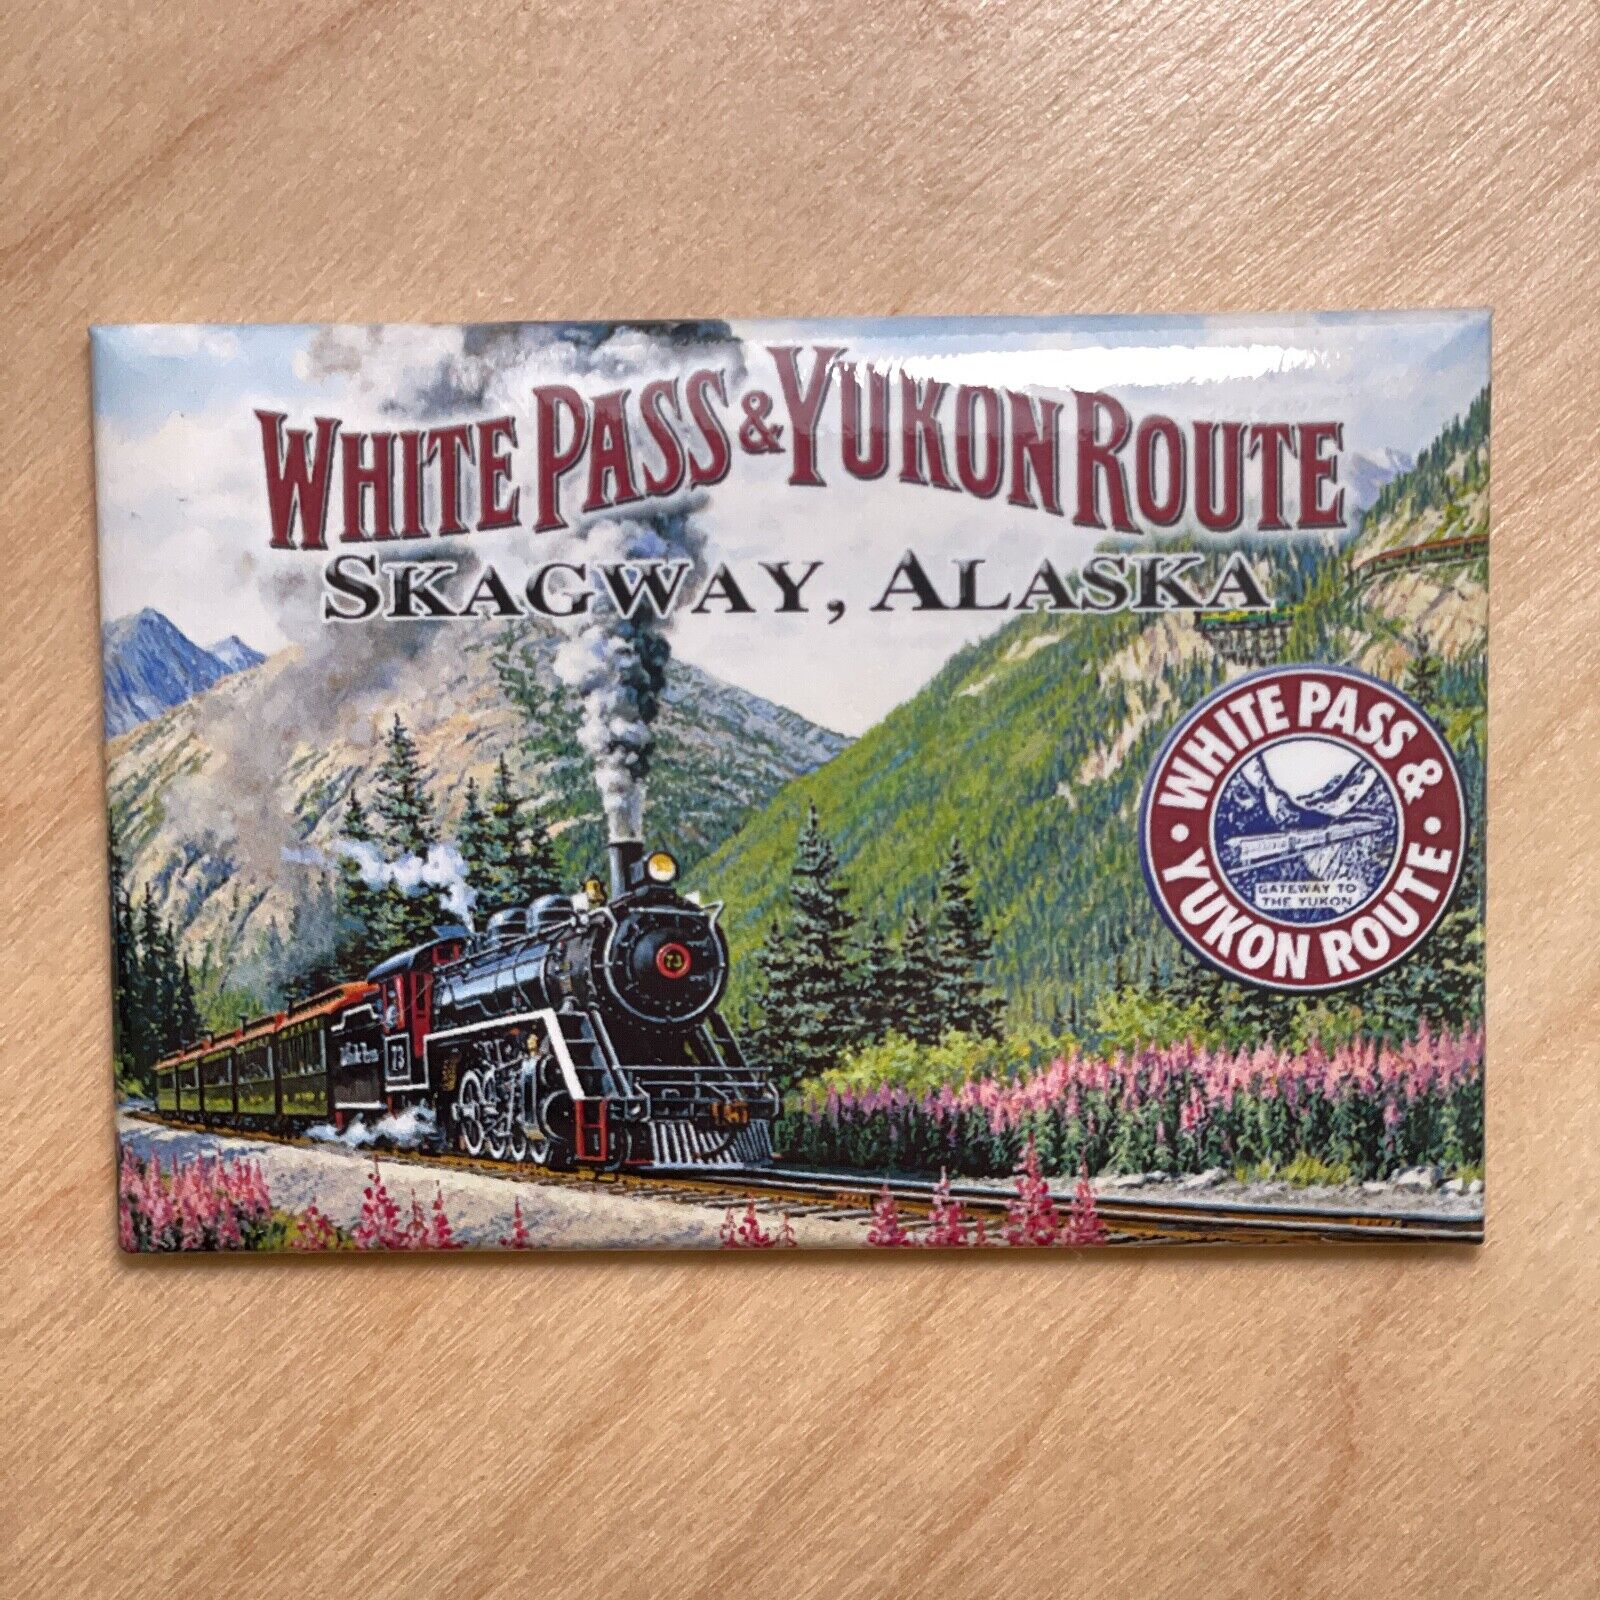 White Pass & Yukon Route Skagway, Alaska - Souvenir Refrigerator Fridge Magnet